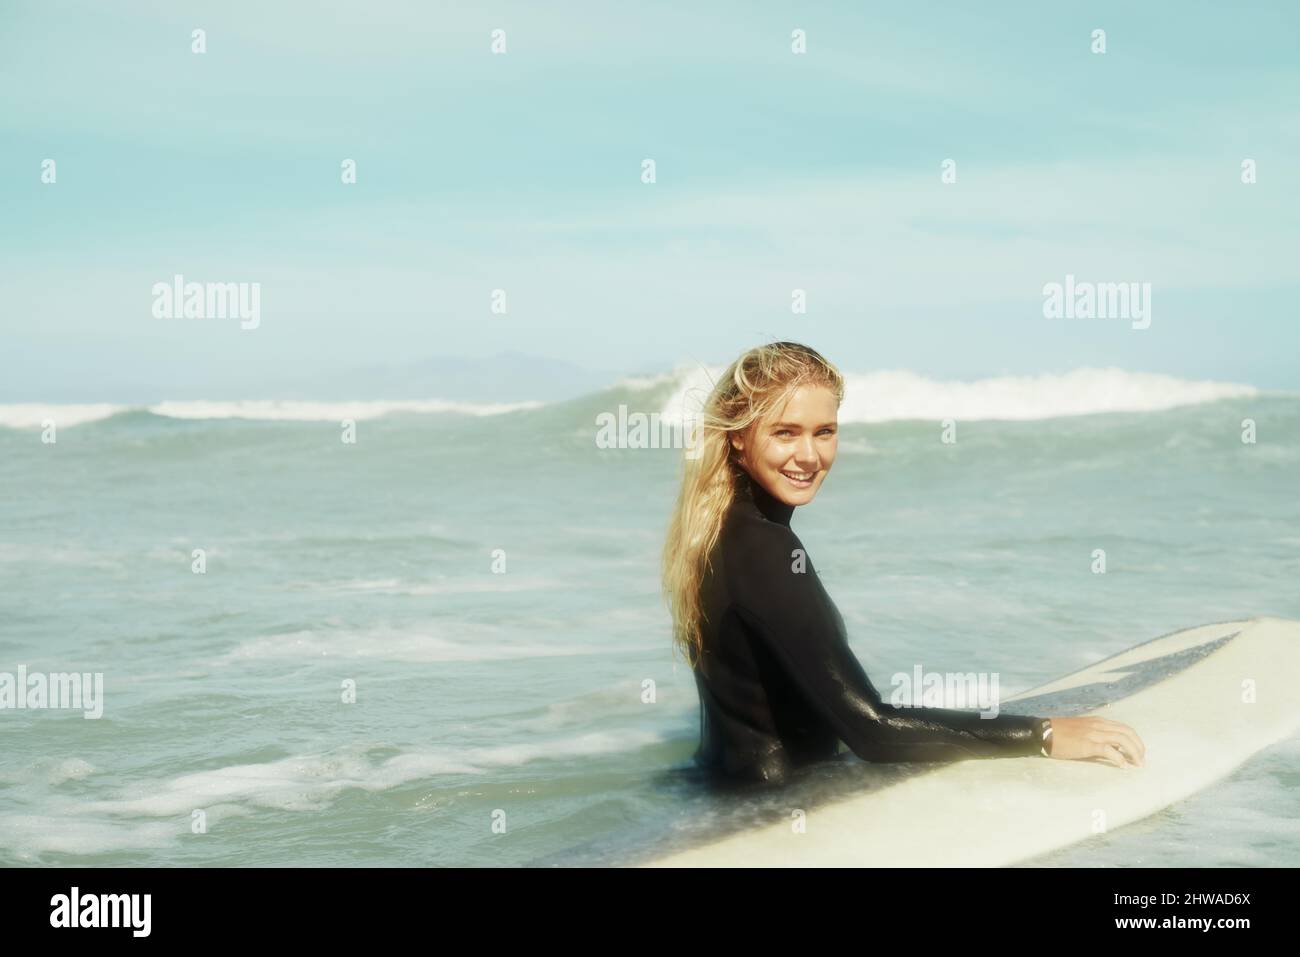 Blonde surfeuse